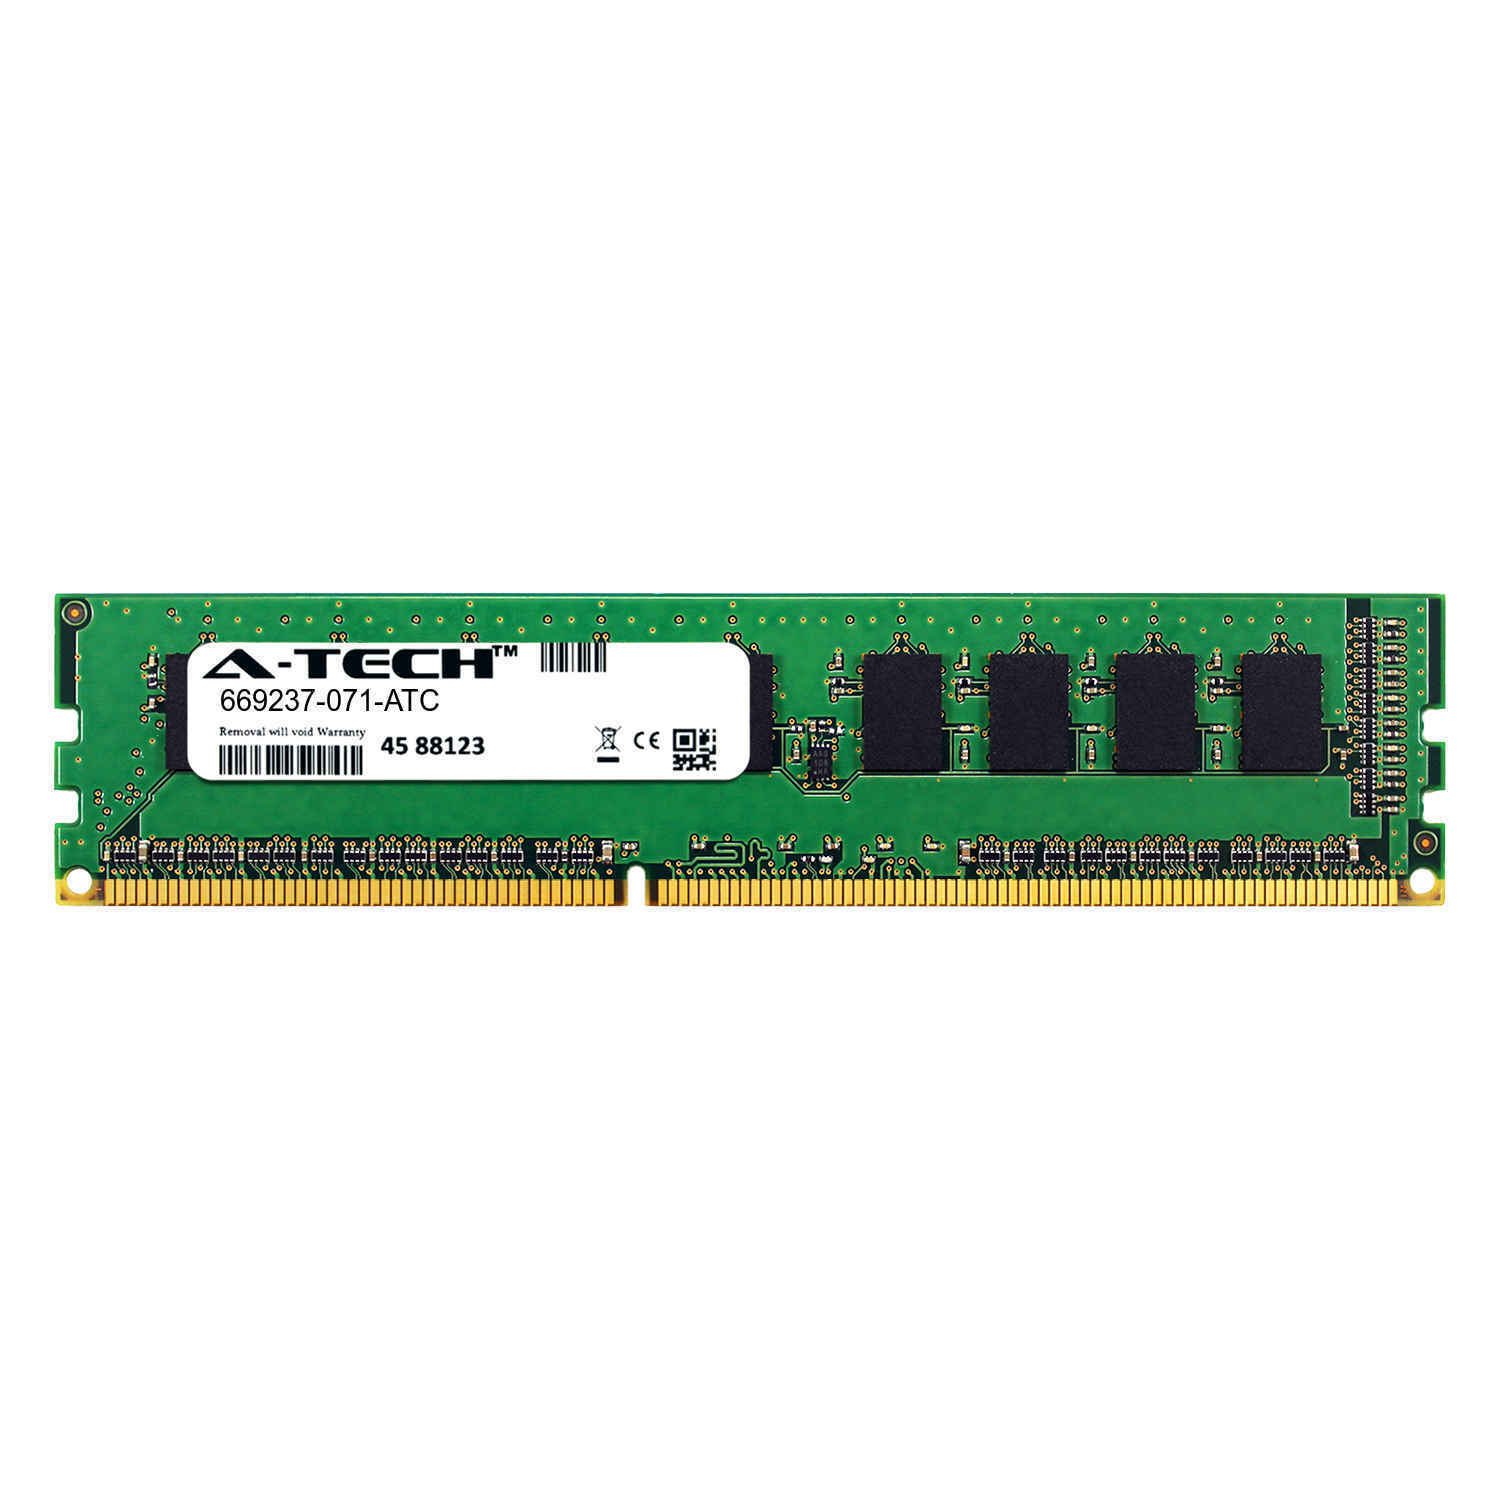 2GB DDR3 PC3-12800E ECC UDIMM (HP 669237-071 Equivalent) Server Memory RAM